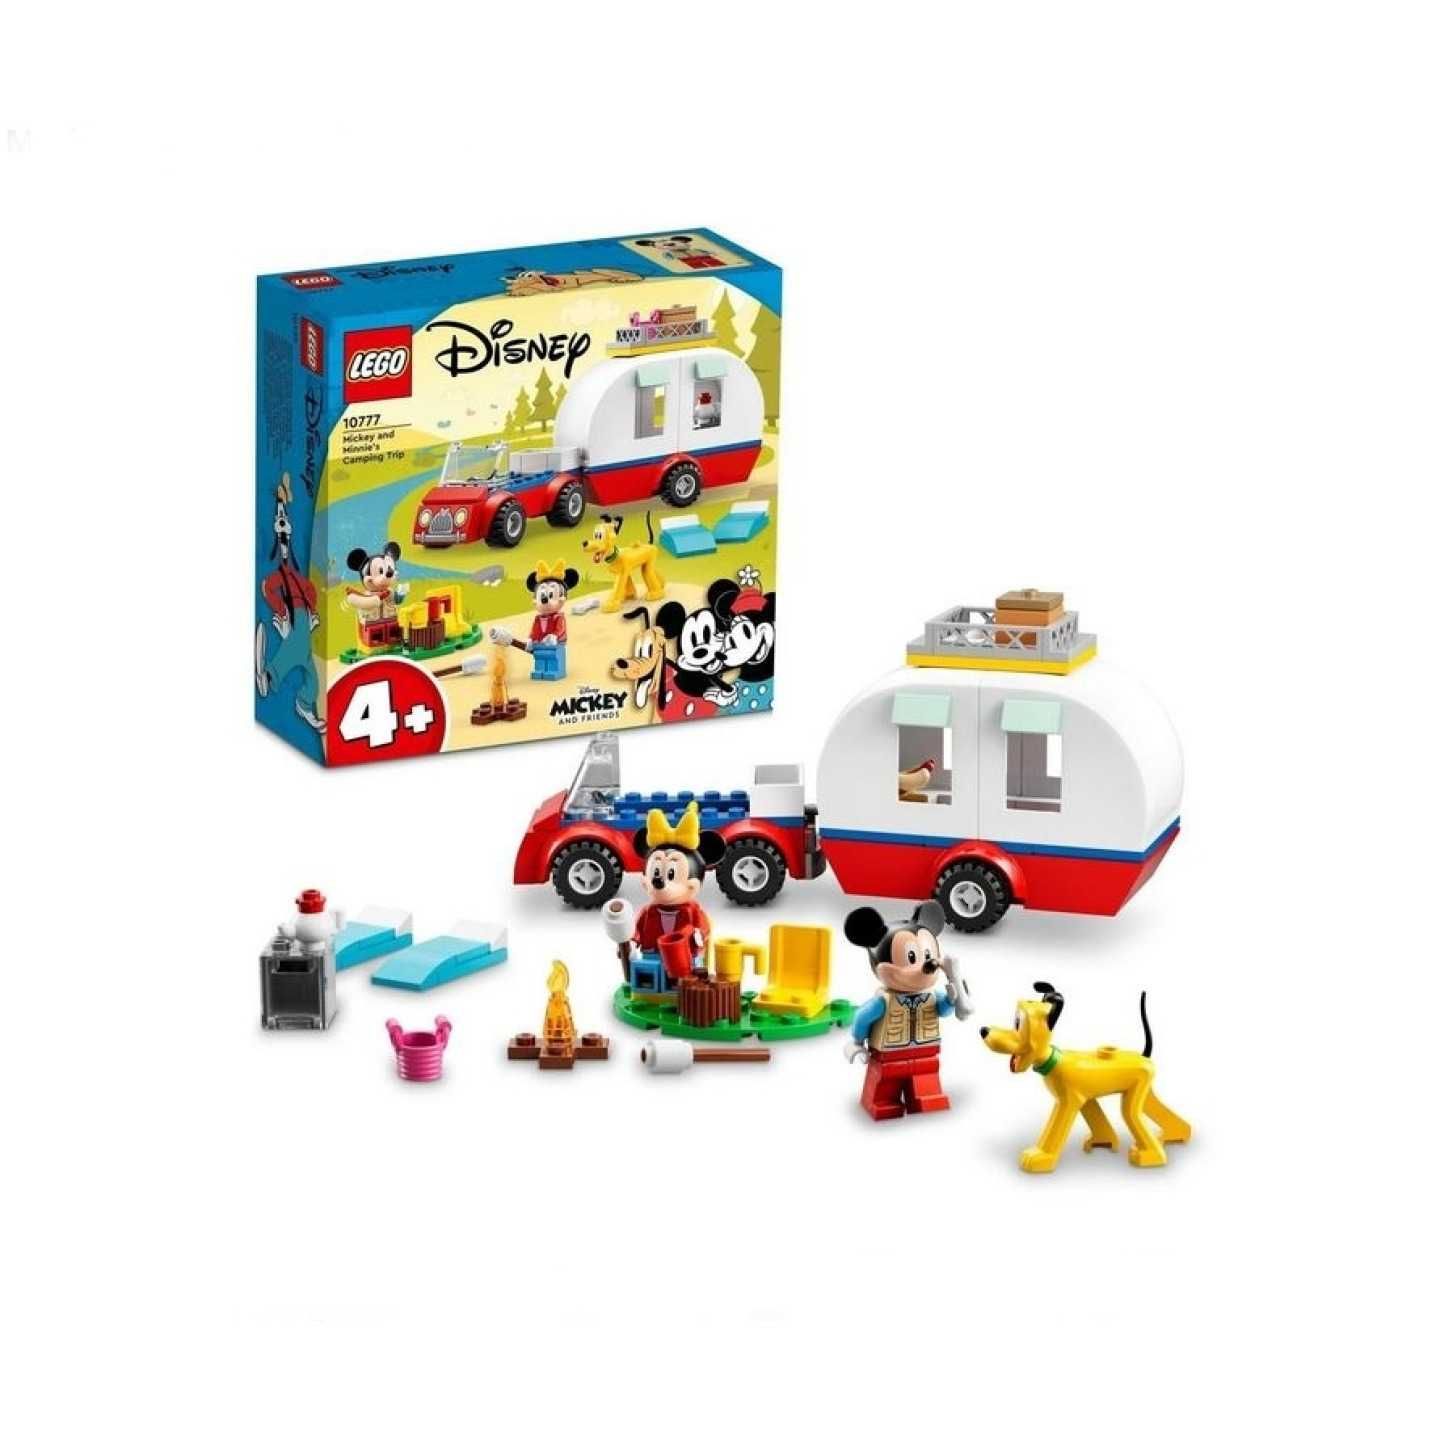 Lego Disney Mickey and Friends 10777 За городом. В наличии